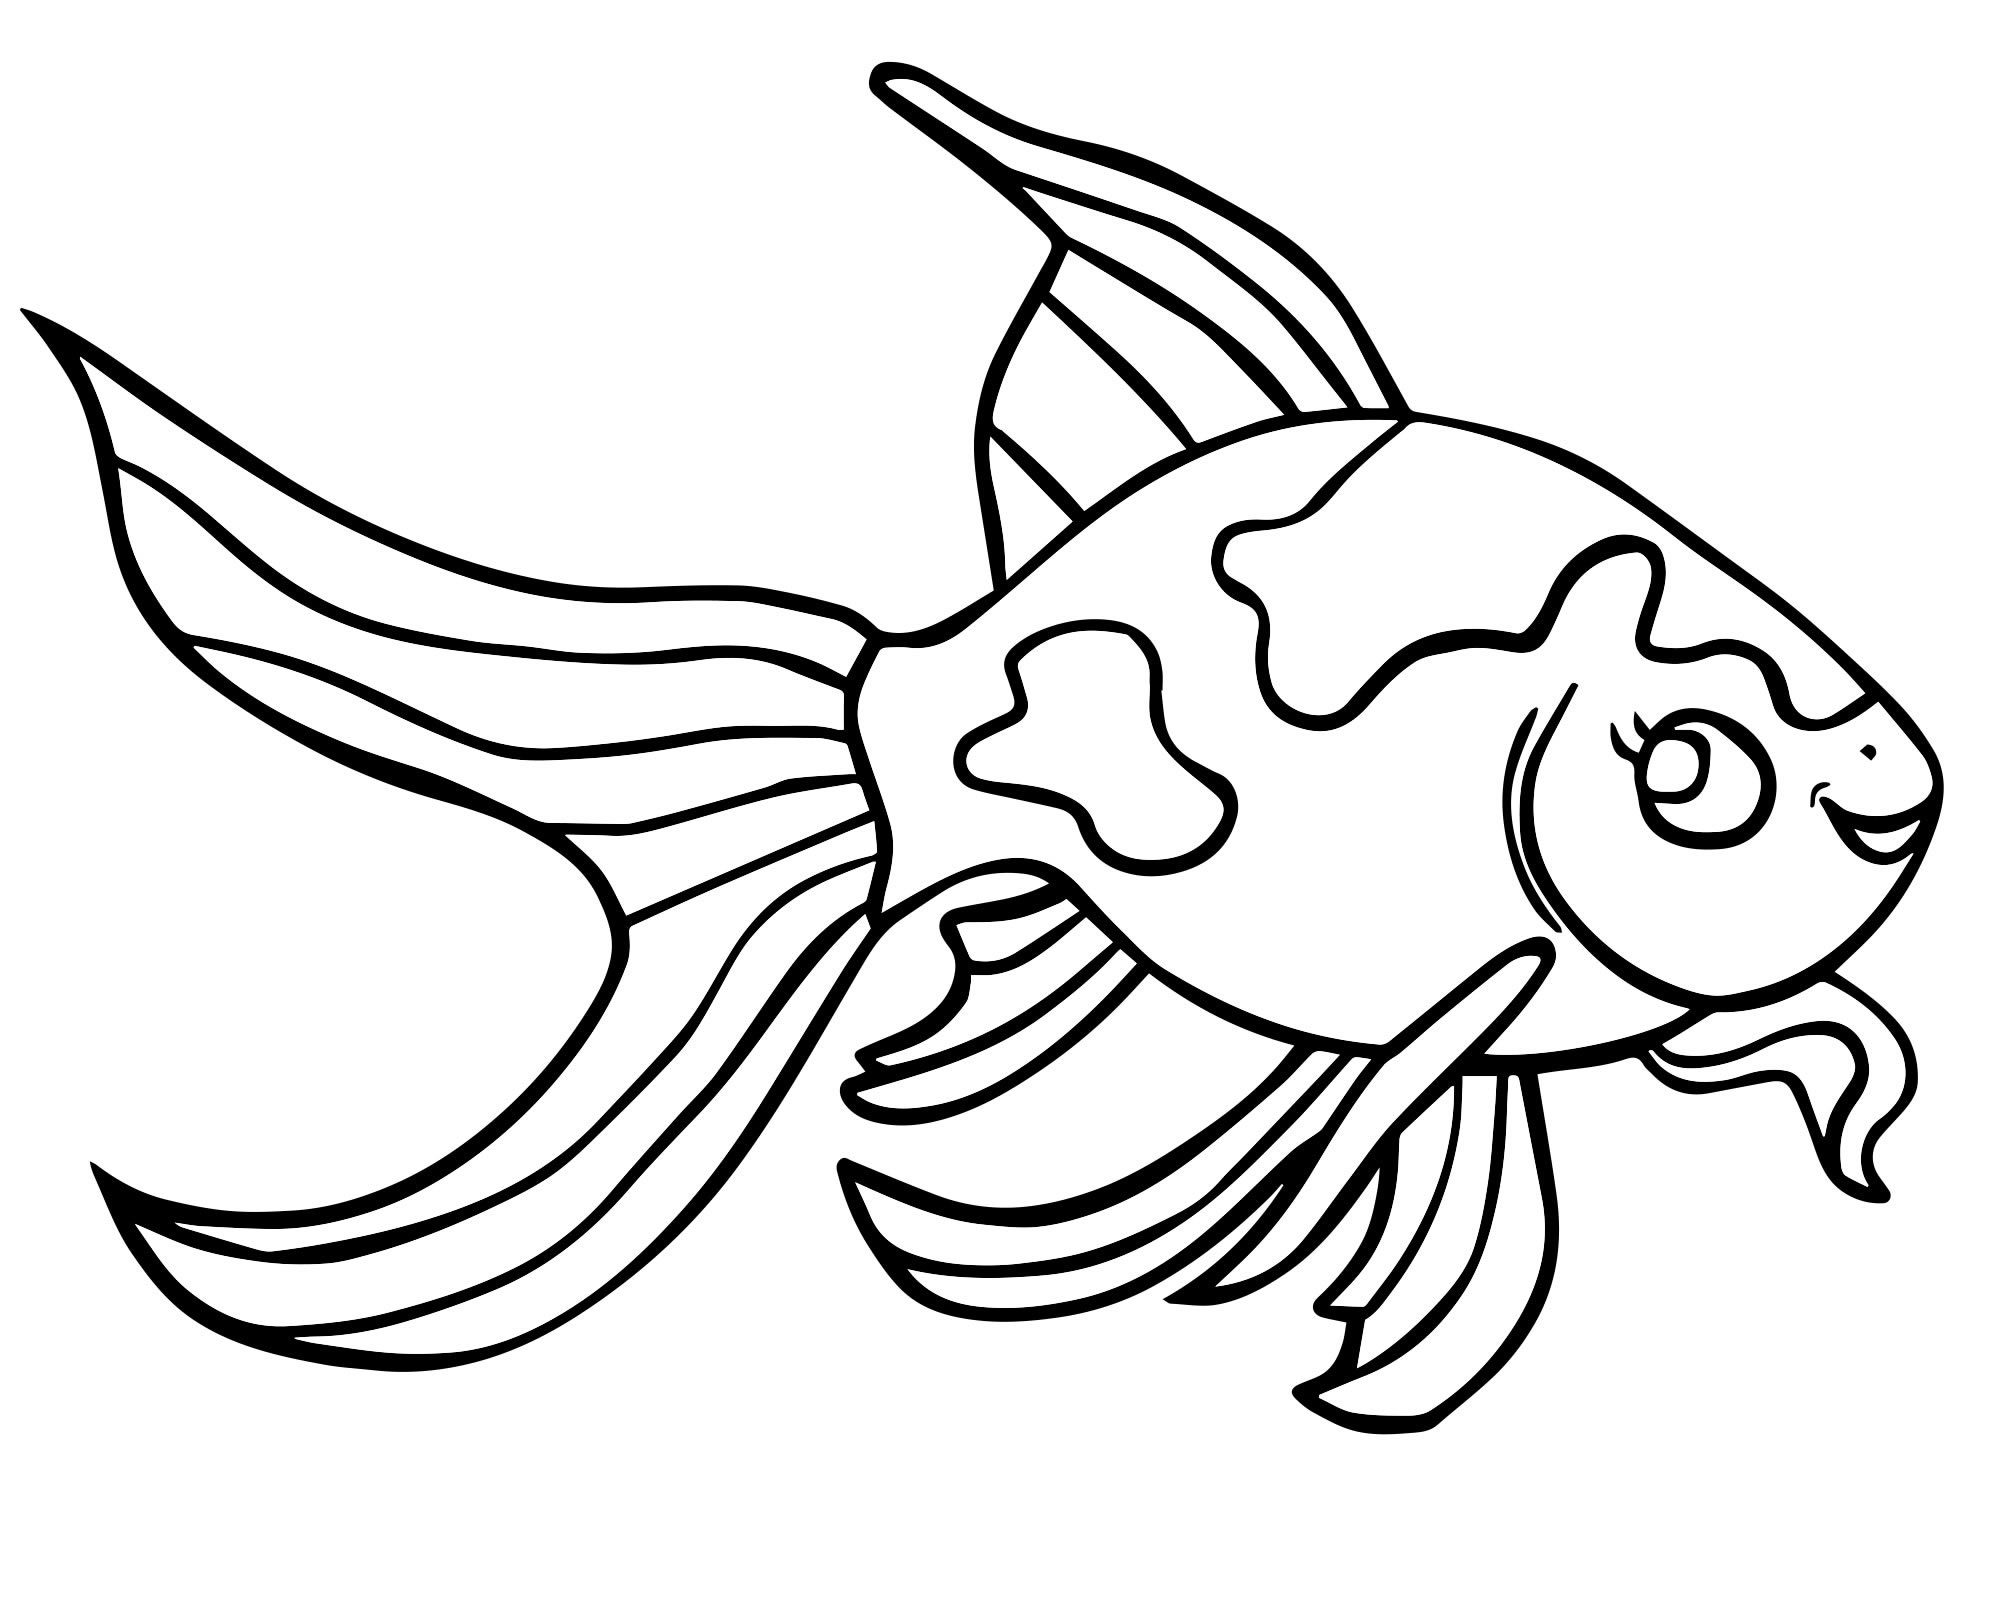 Раскраски рыбка